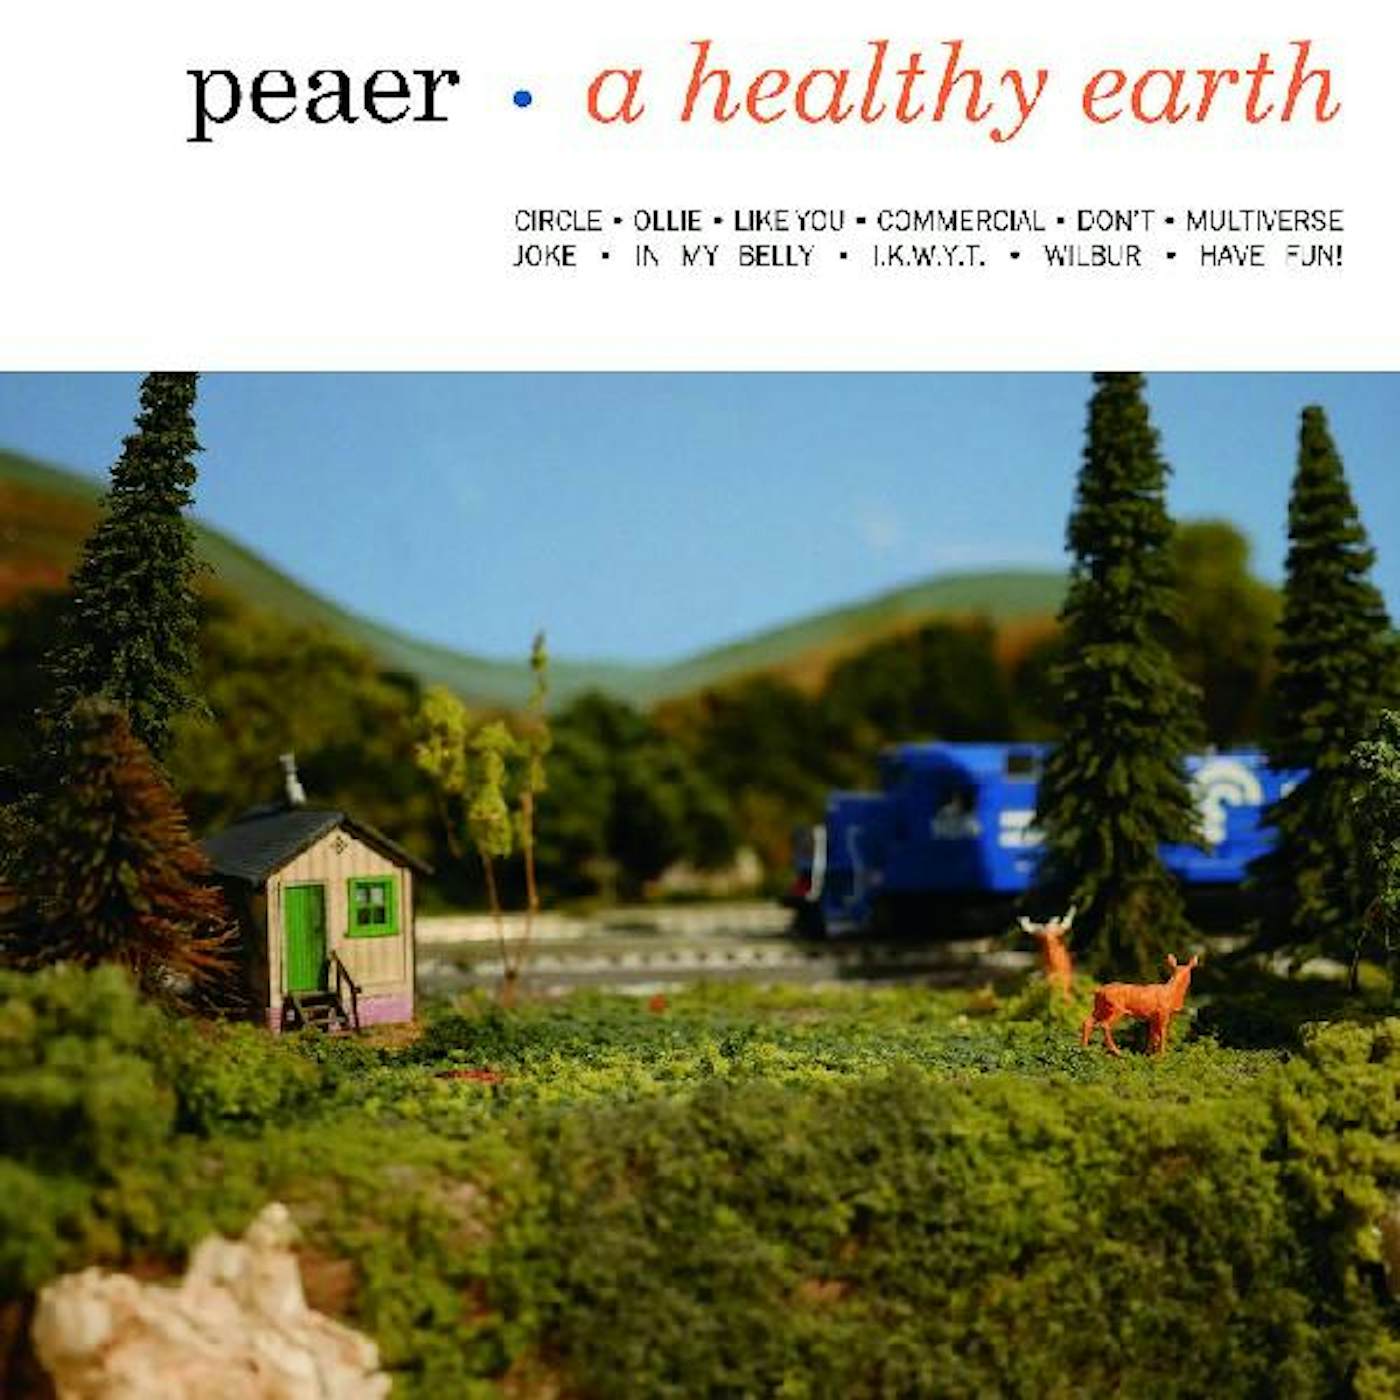 Peaer HEALTHY EARTH Vinyl Record